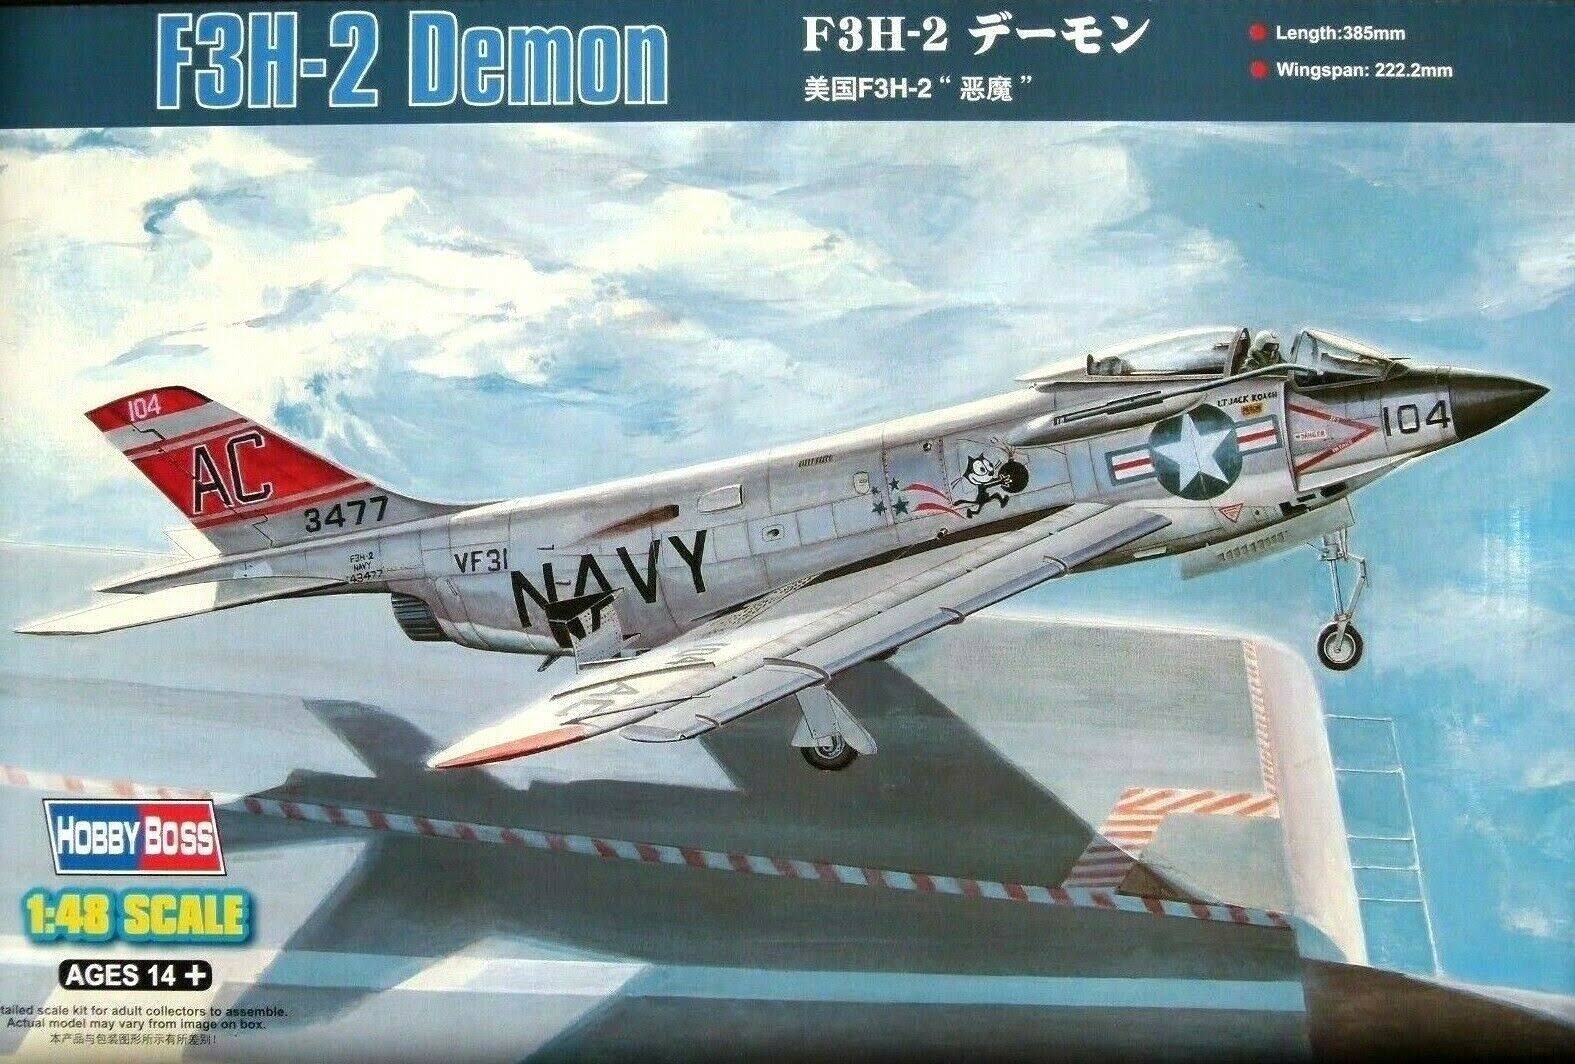 Hobby Boss F3H-2 Demon Airplane Model Building Kit - 1:48 Scale